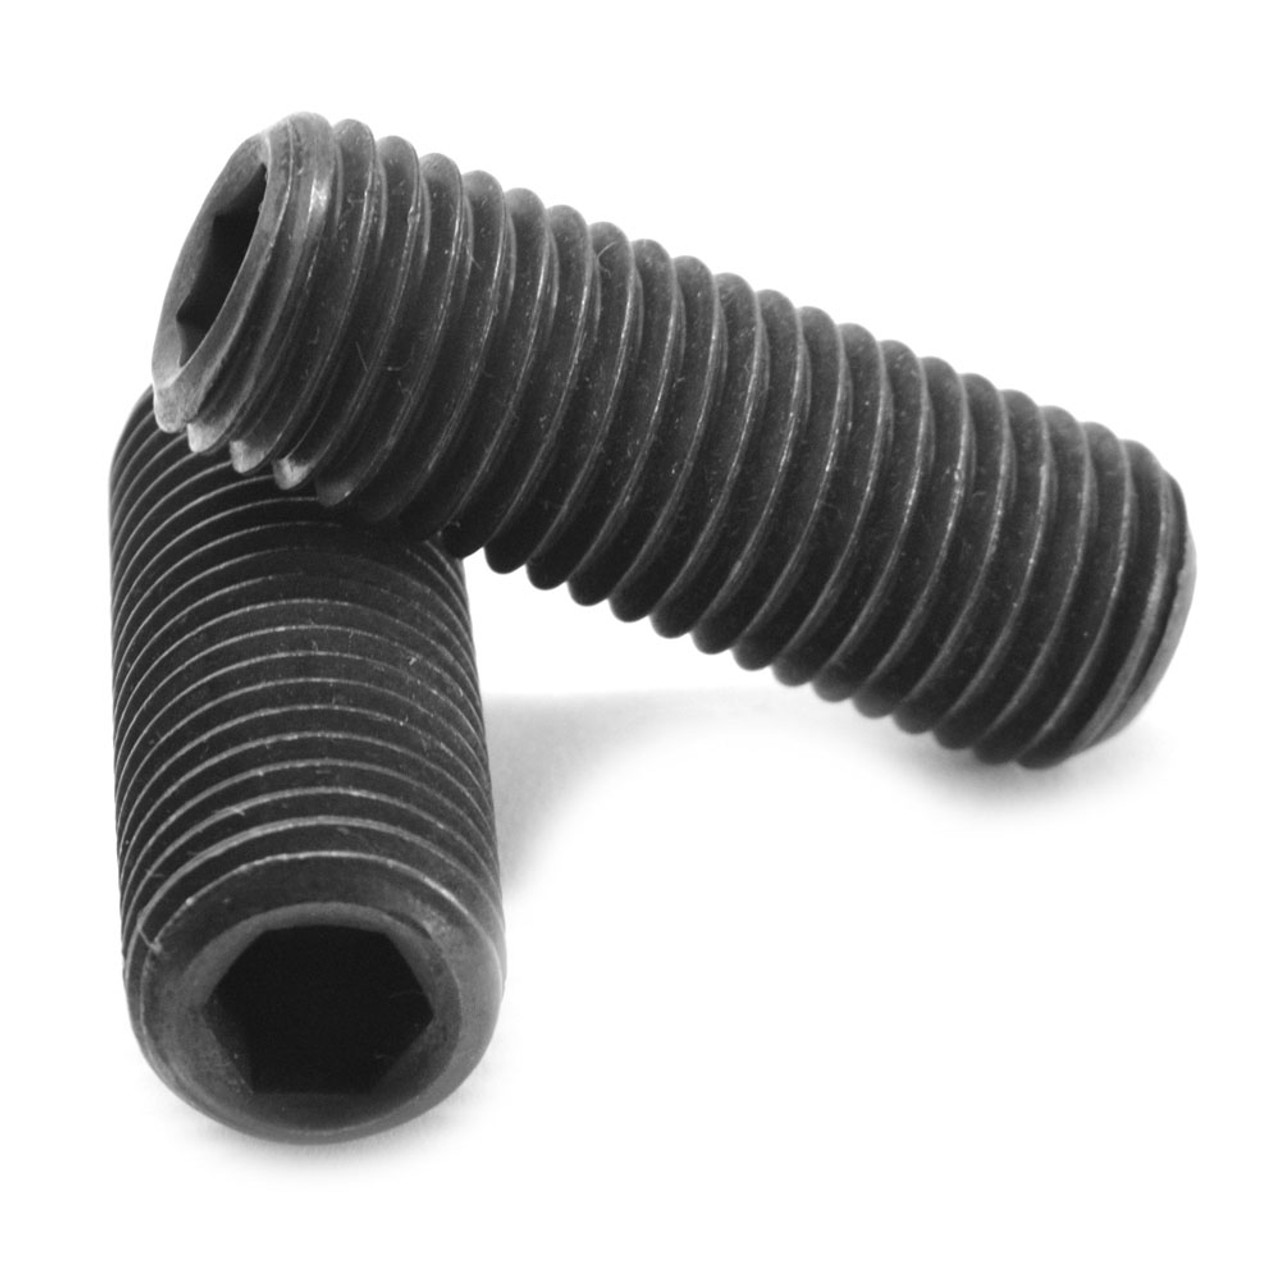 5/16"-18 x 3" Coarse Thread Socket Set Screw Cup Point Alloy Steel Black Oxide